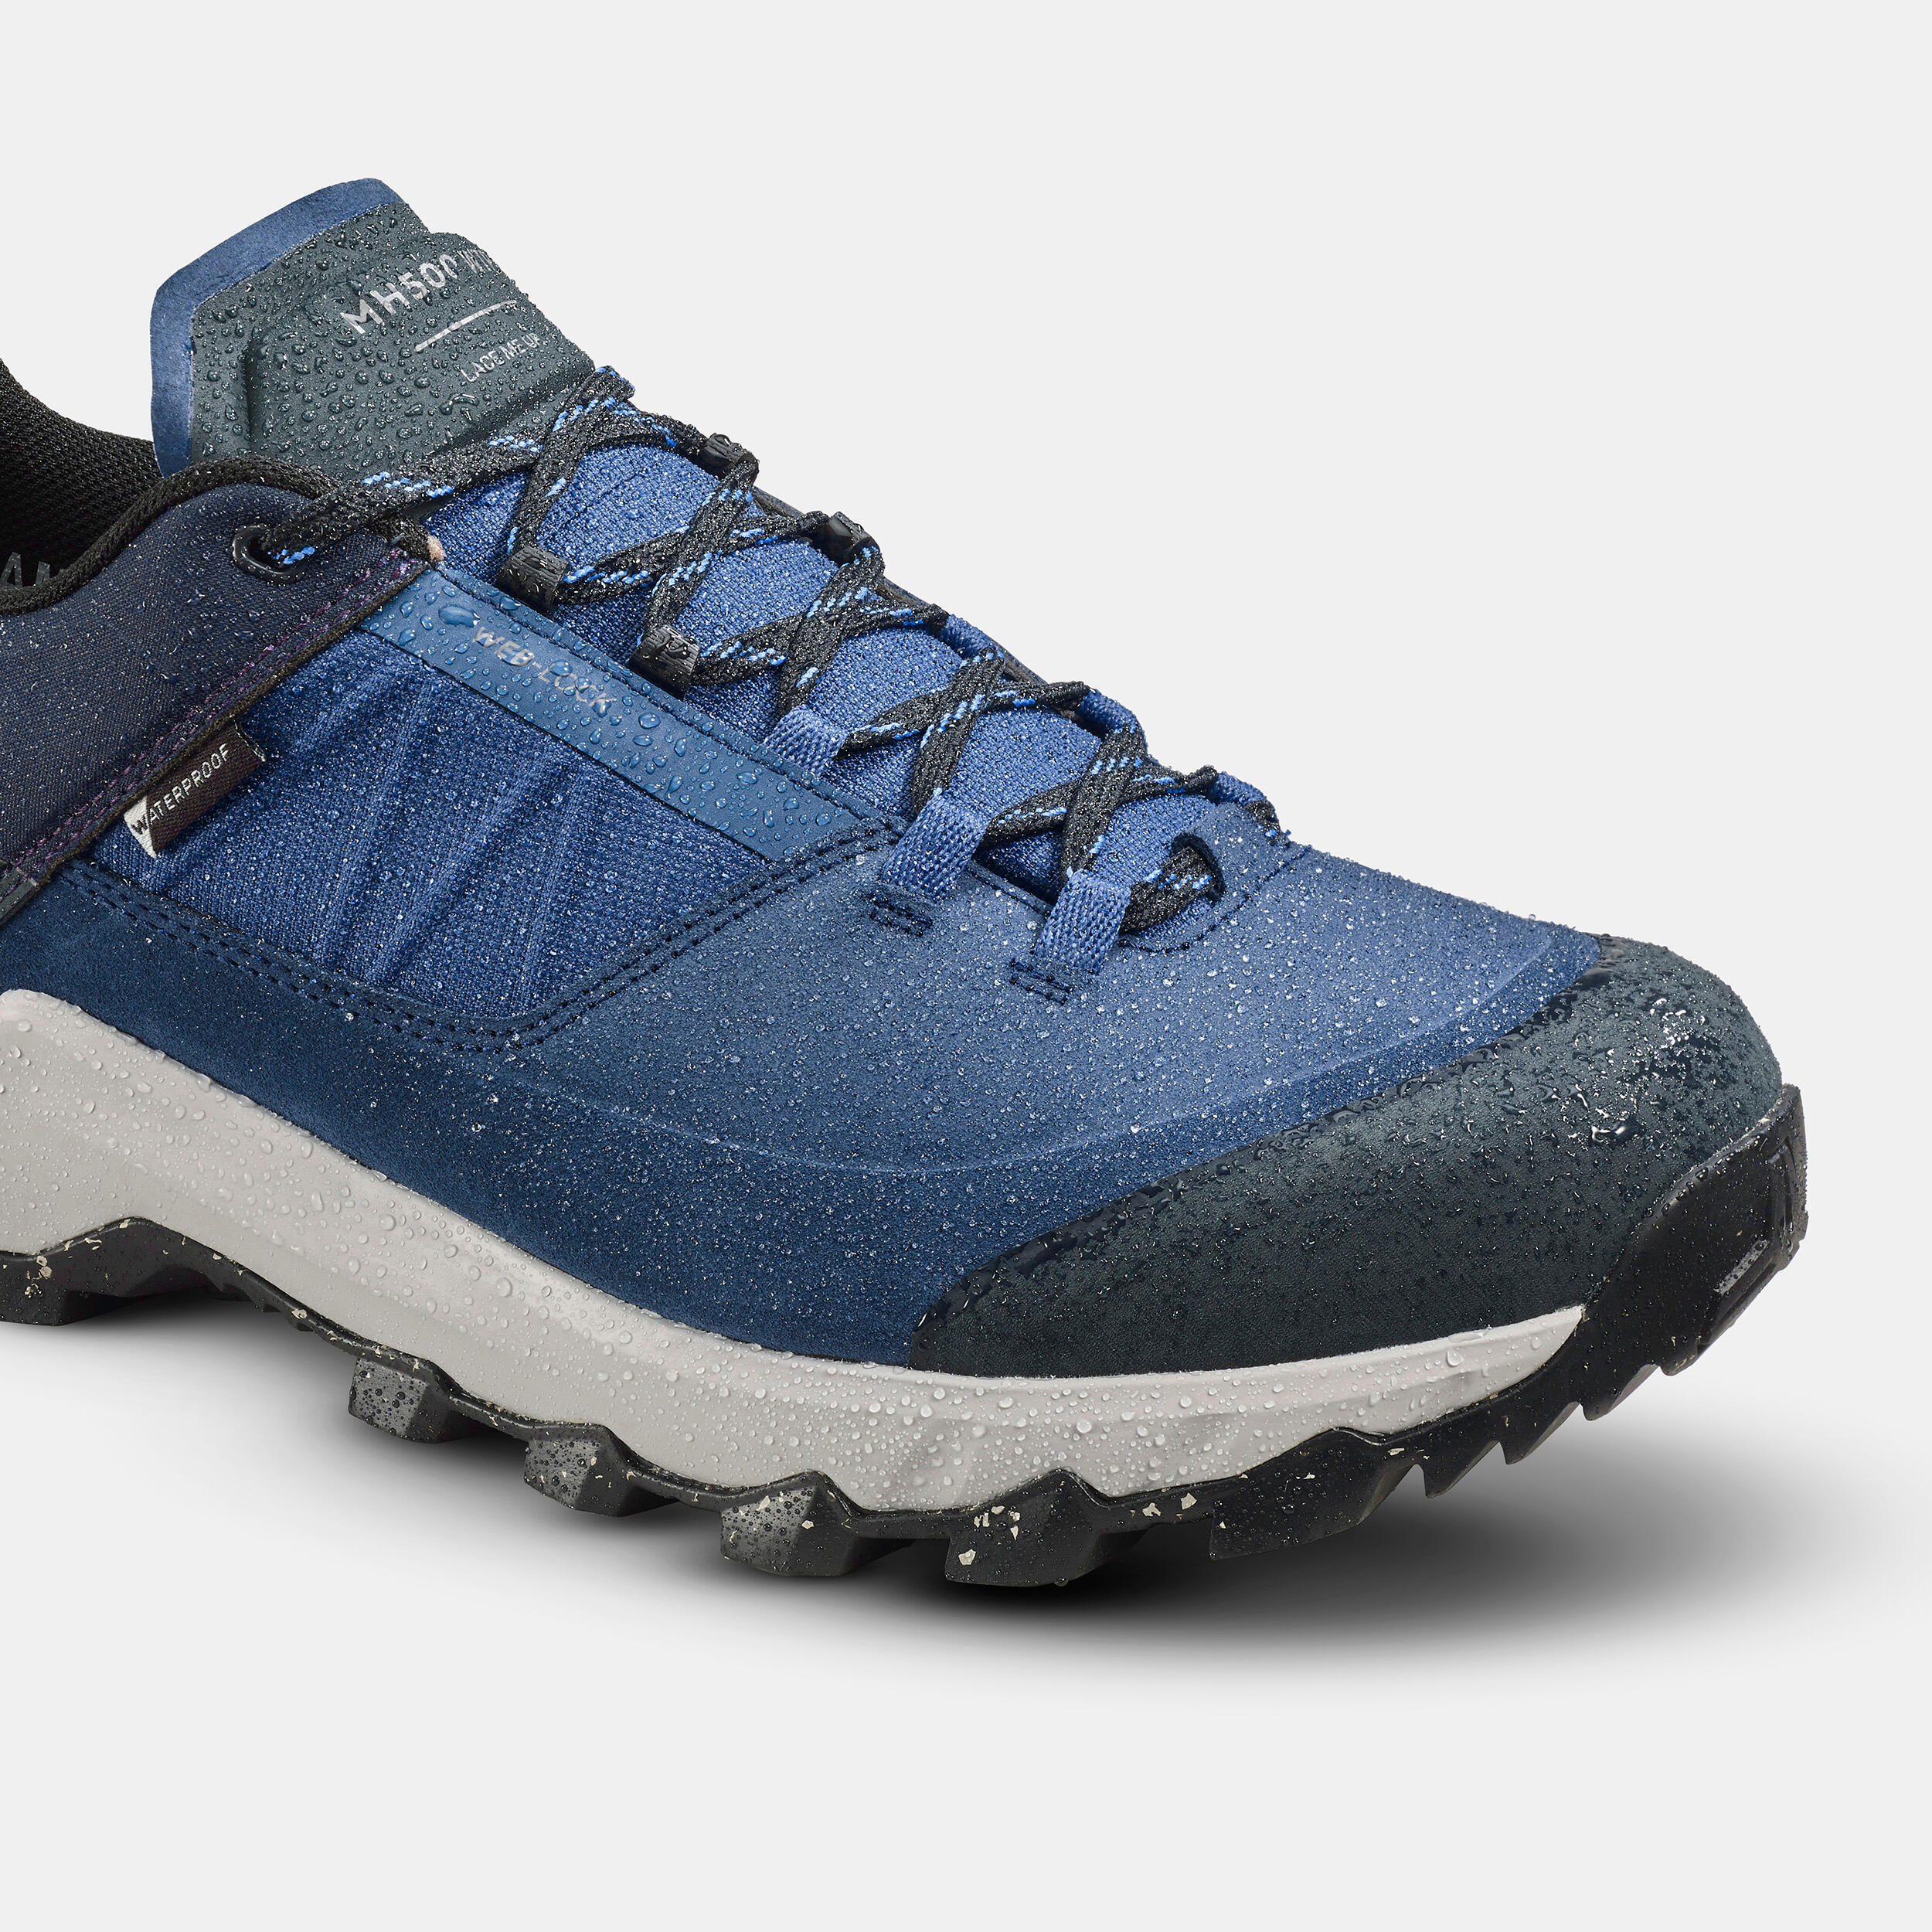 Men's waterproof hiking shoes - MH500 blue